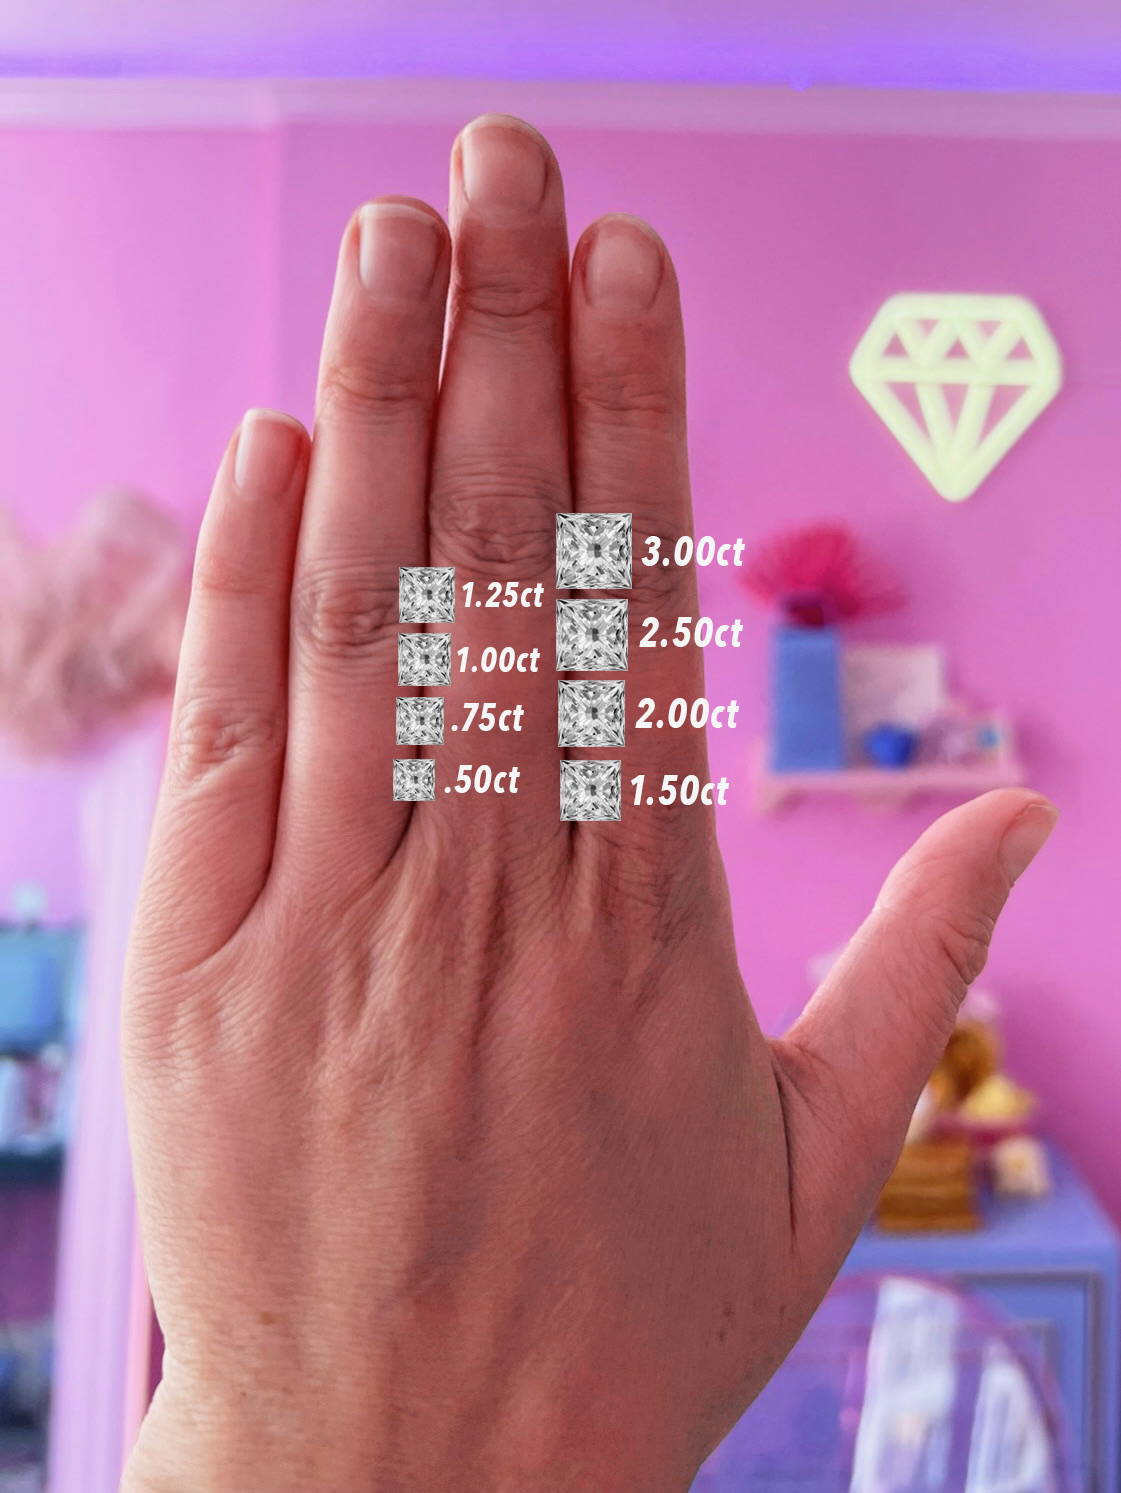 princess cut diamond carat sizes on a hand